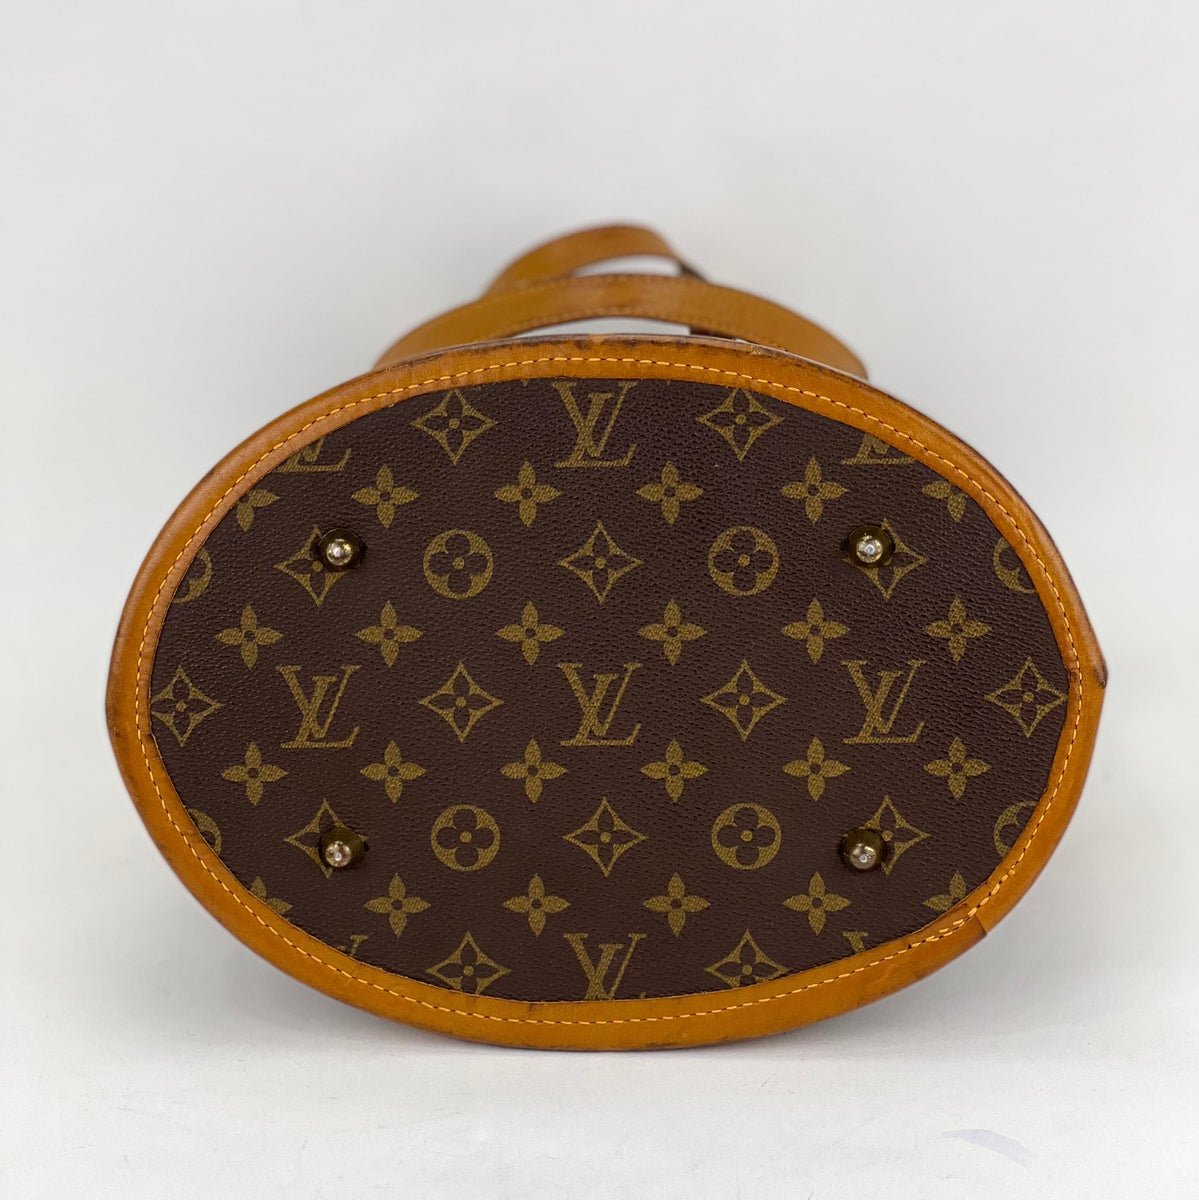 Louis Vuitton Bag Monogram Bucket GM Canvas Shoulder Hand Bag